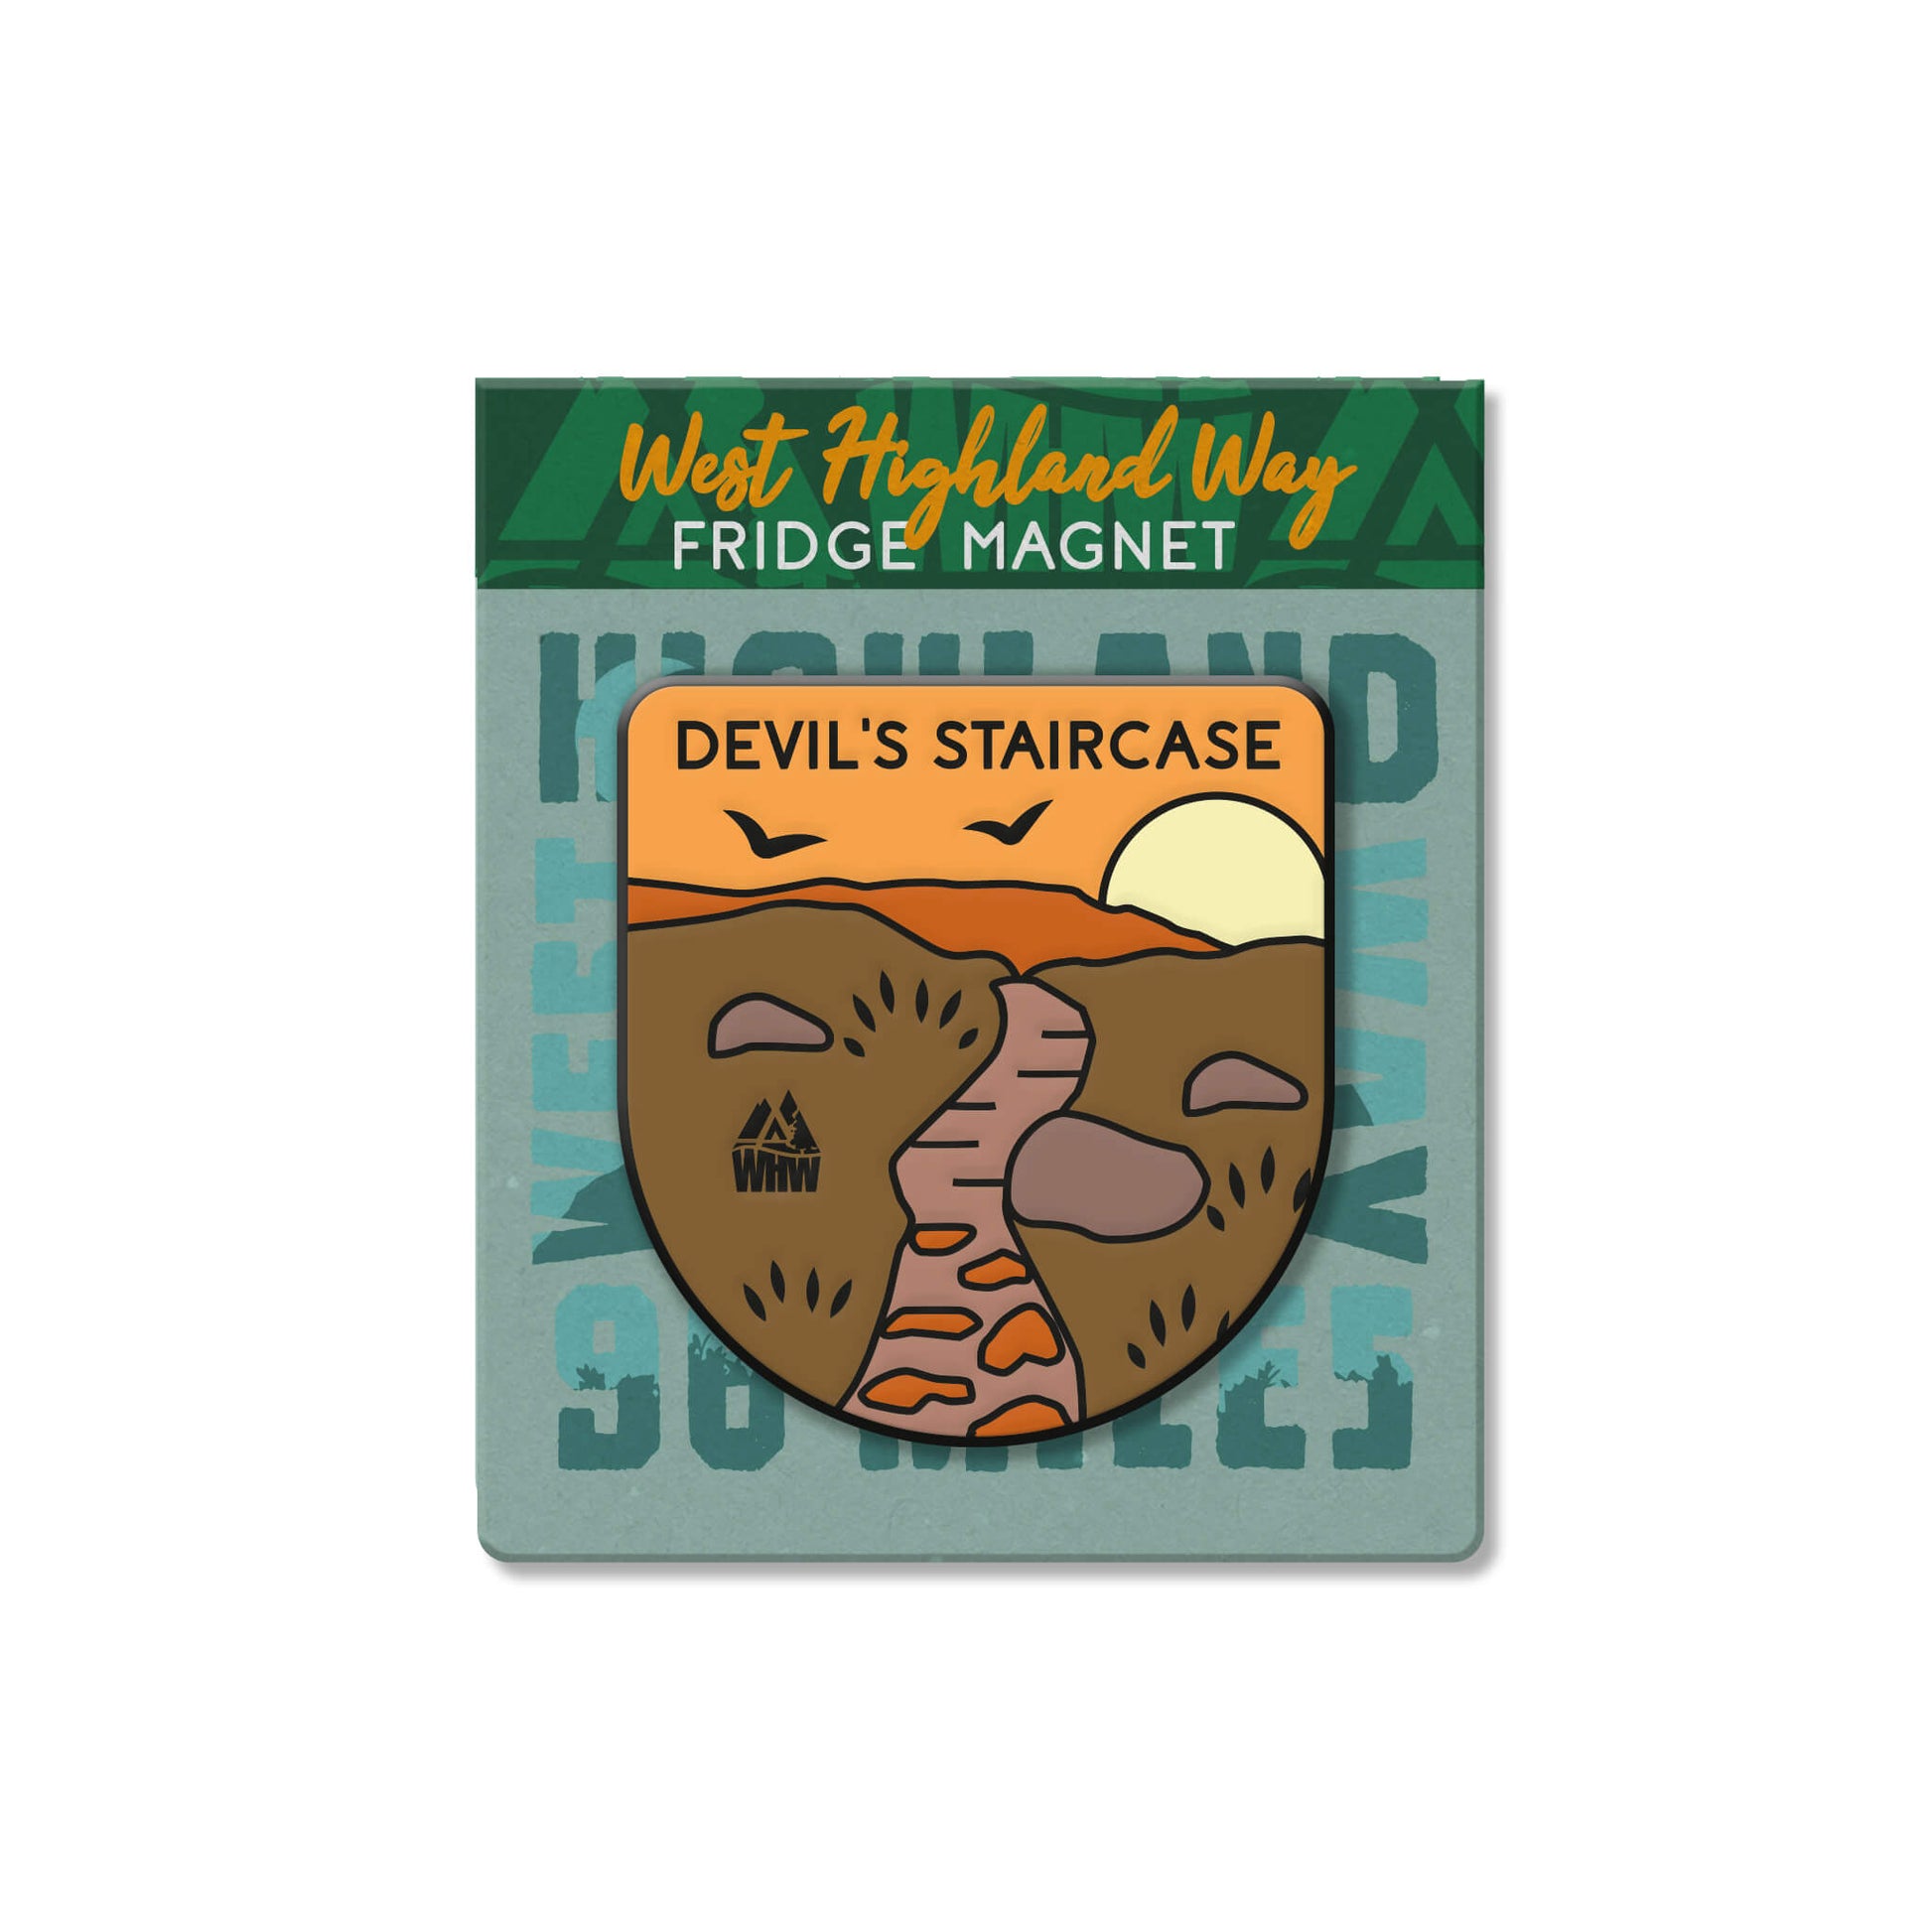 Devil's Staircase Fridge Magnet - West Highland Way